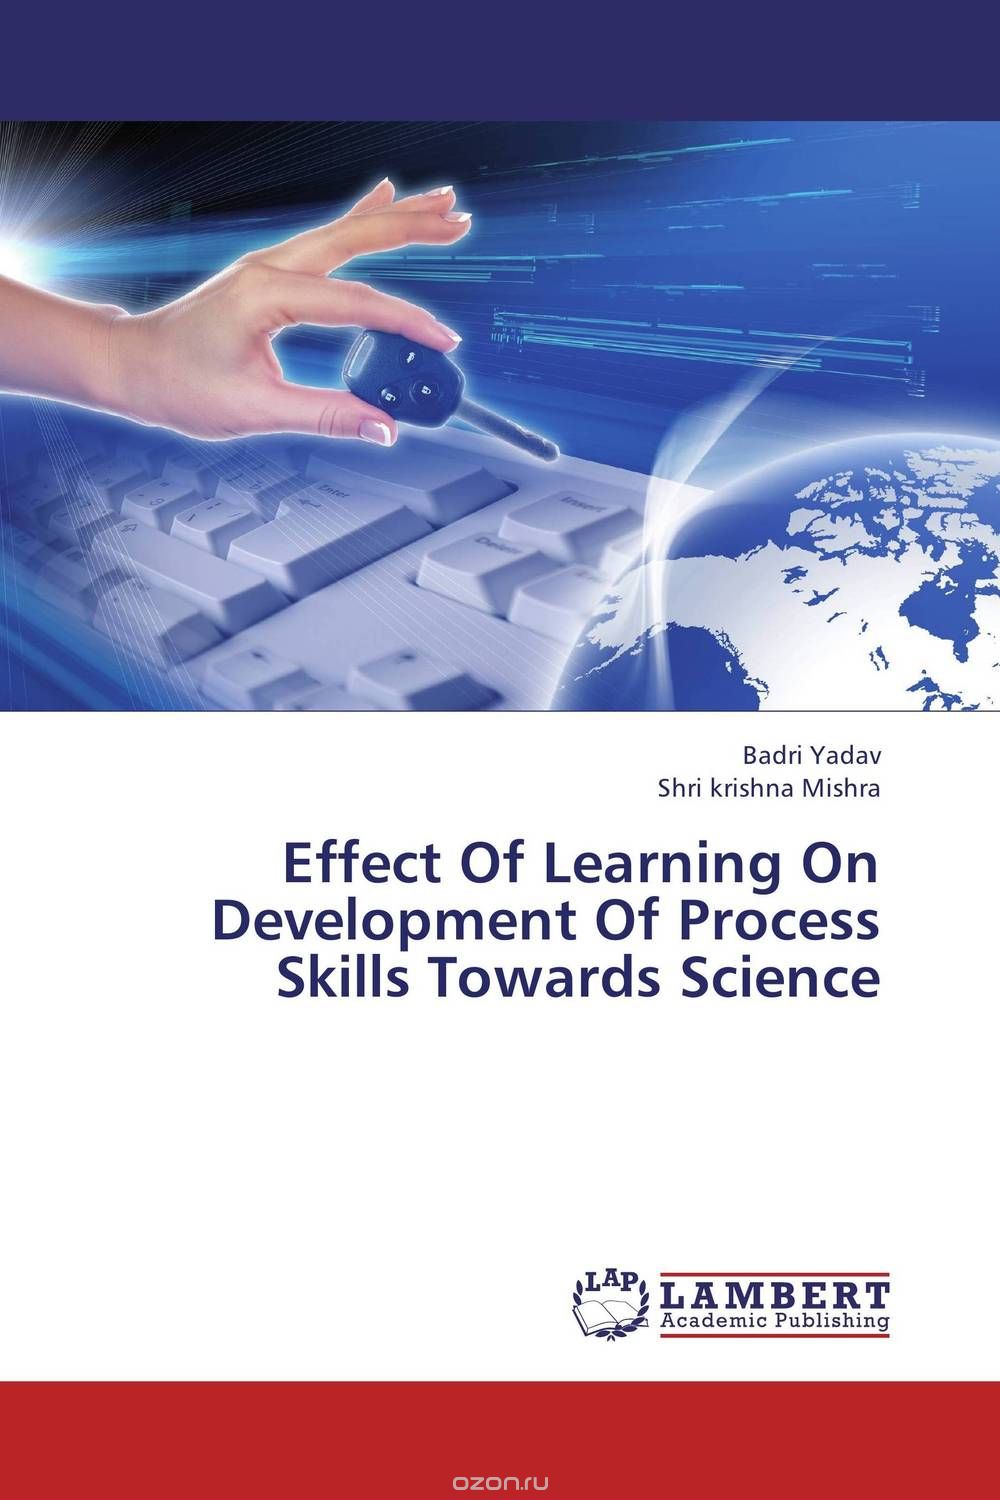 Скачать книгу "Effect Of Learning On Development Of Process Skills Towards Science"